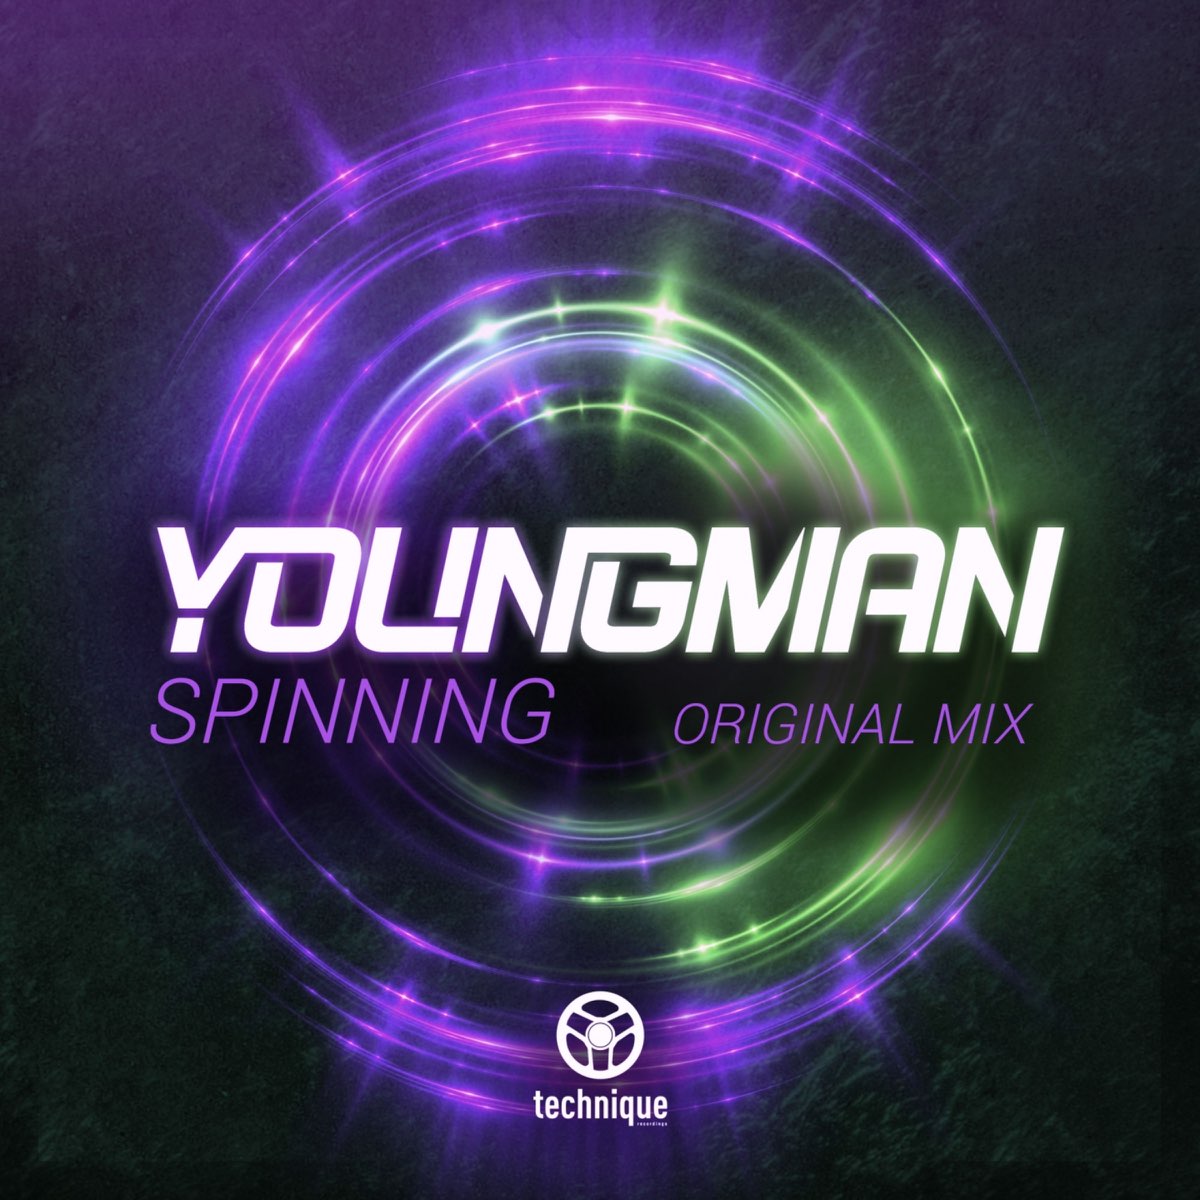 Span музыка. Spin музыка. World is Spinning мелодия. Technique recordings. Youngman песня.